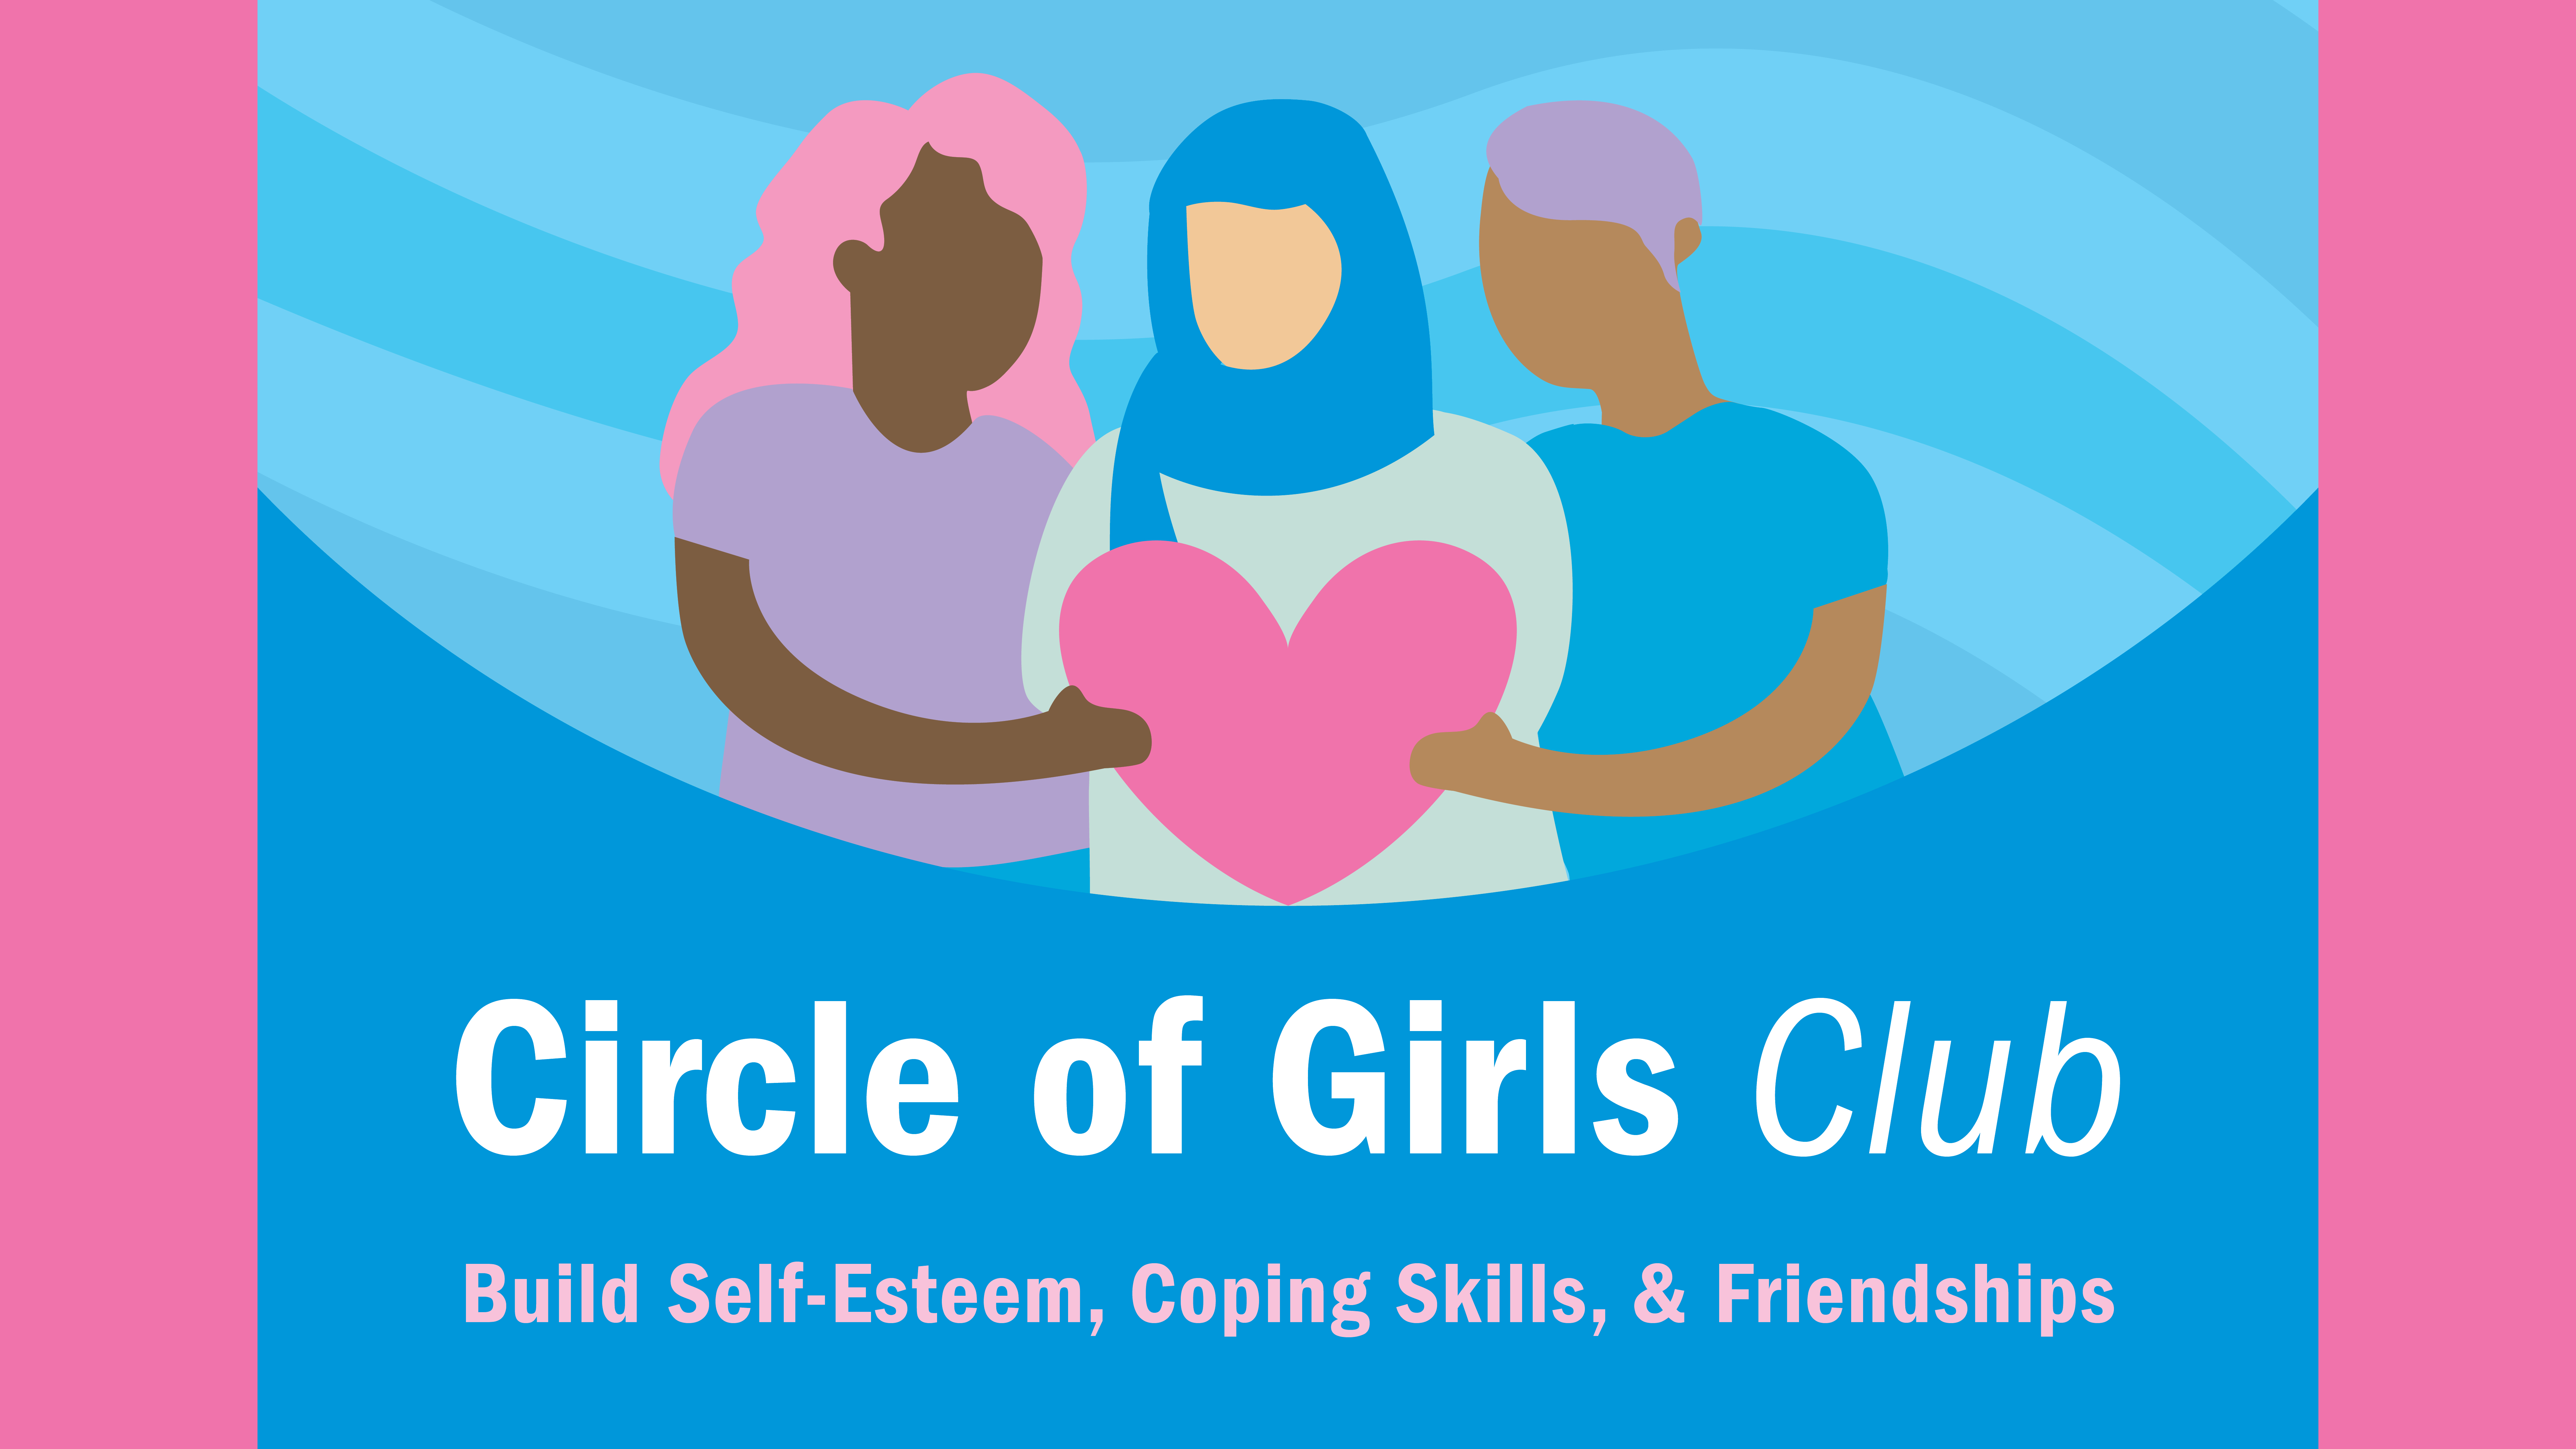 Circle of Girls Club Header Image